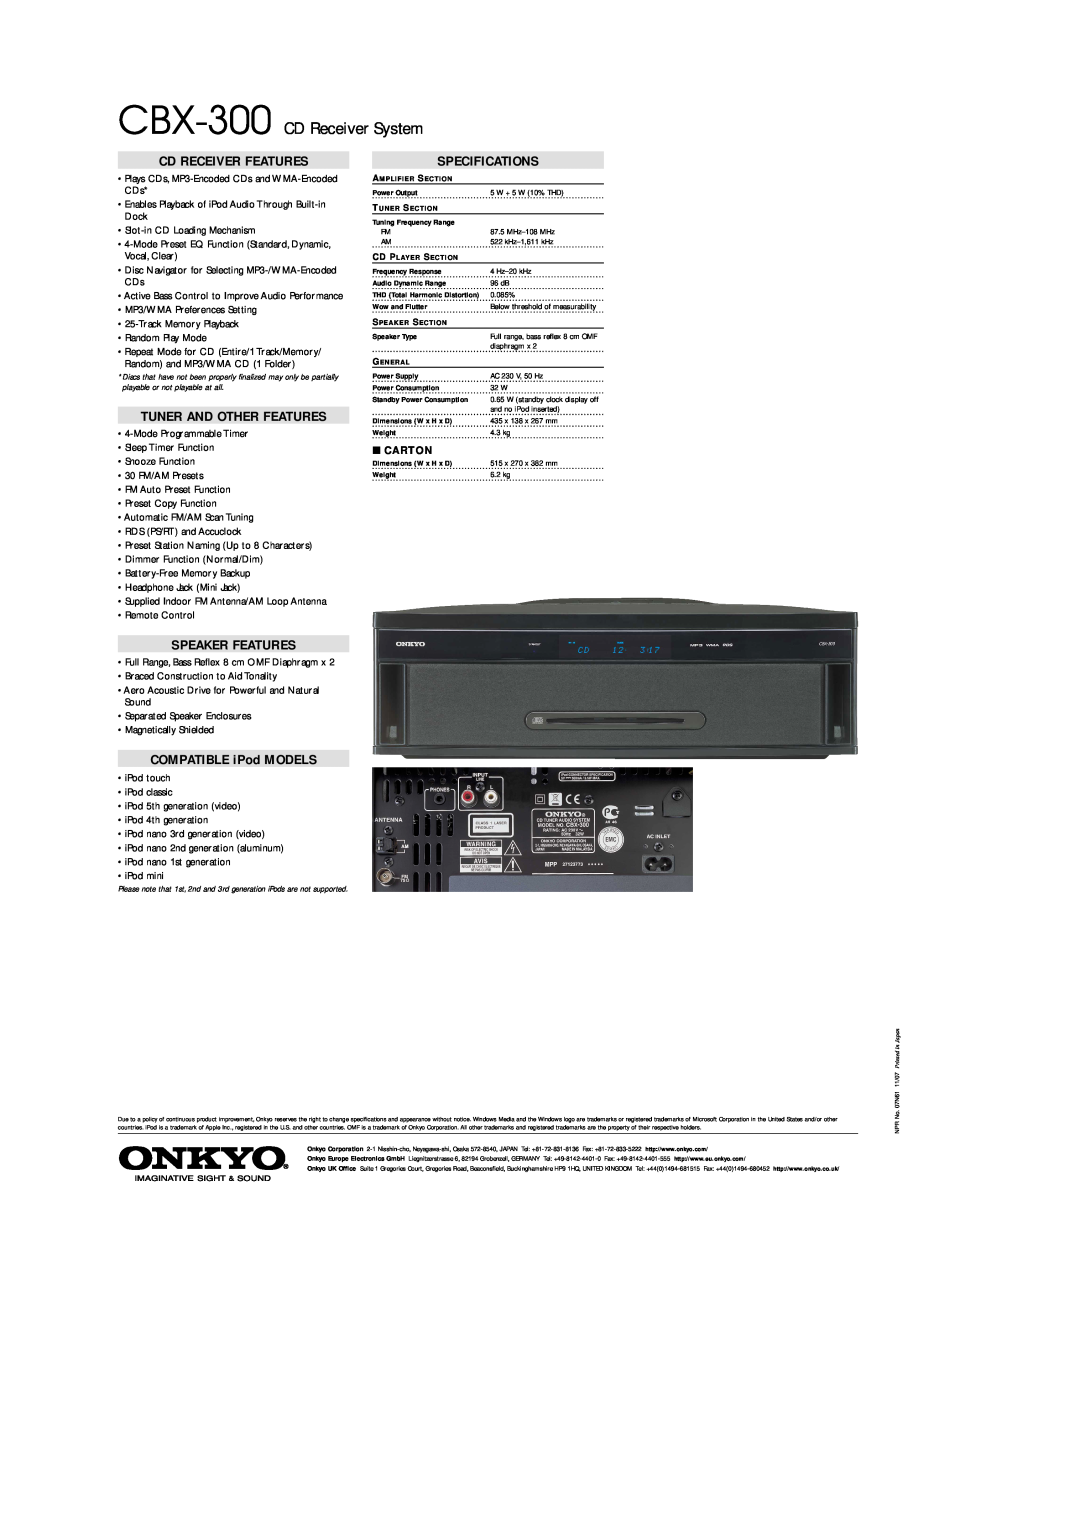 Onkyo CBX-300 CD Receiver System, Cd Receiver Features, Tuner And Other Features, Speaker Features, Specifications 